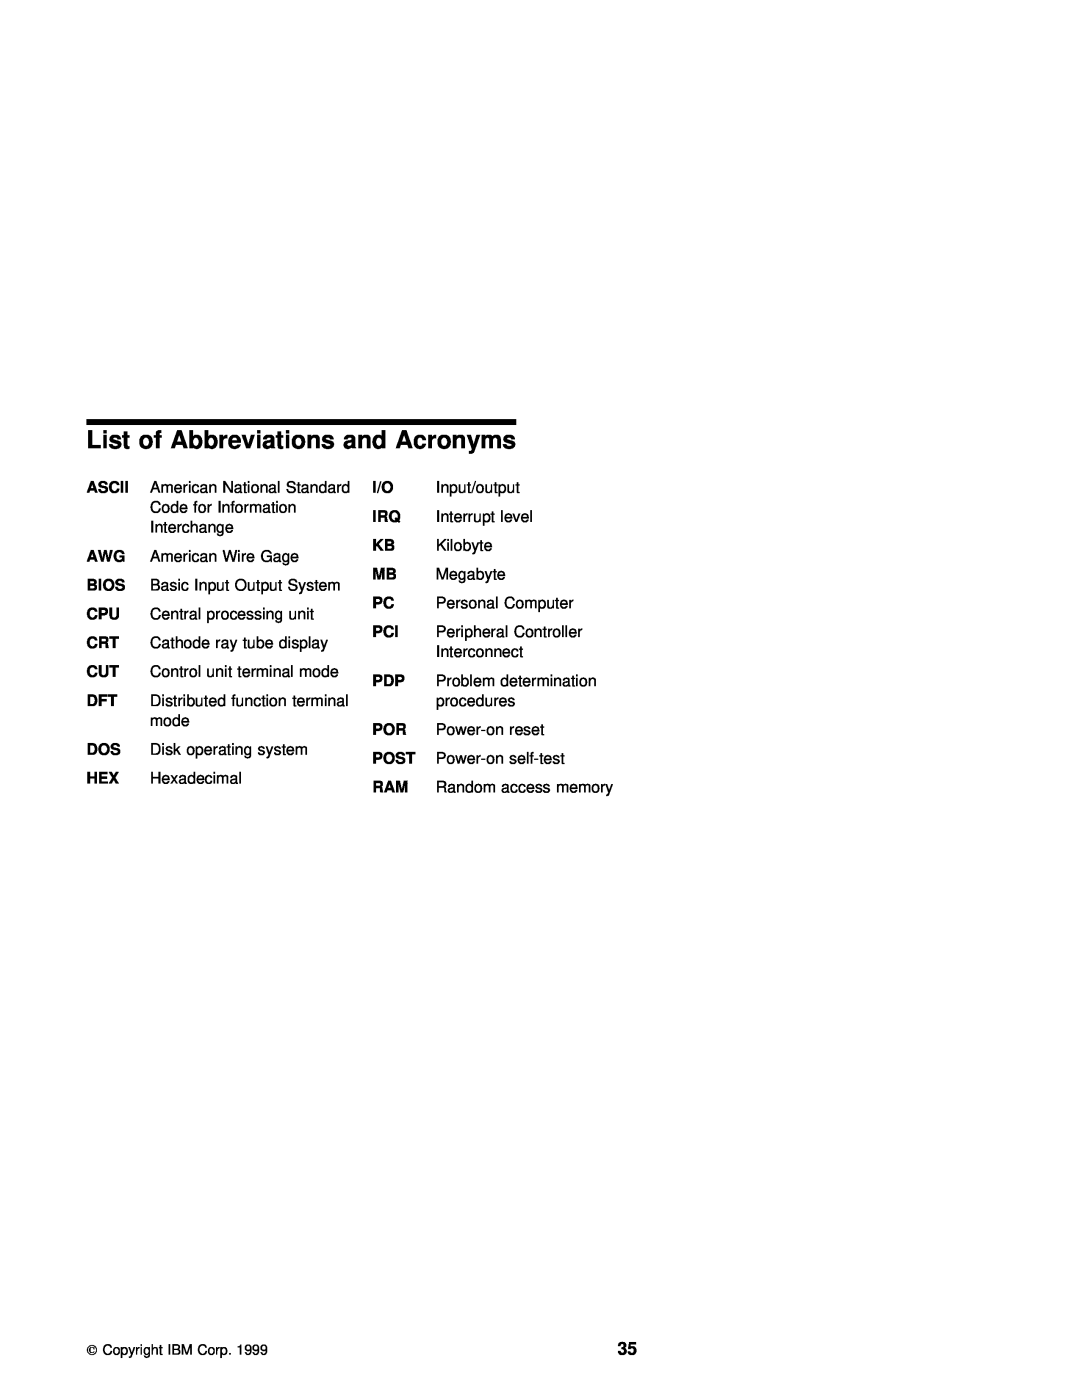 IBM 3270 manual List, Acronyms, Abbreviations, Ascii, Bios, Post 